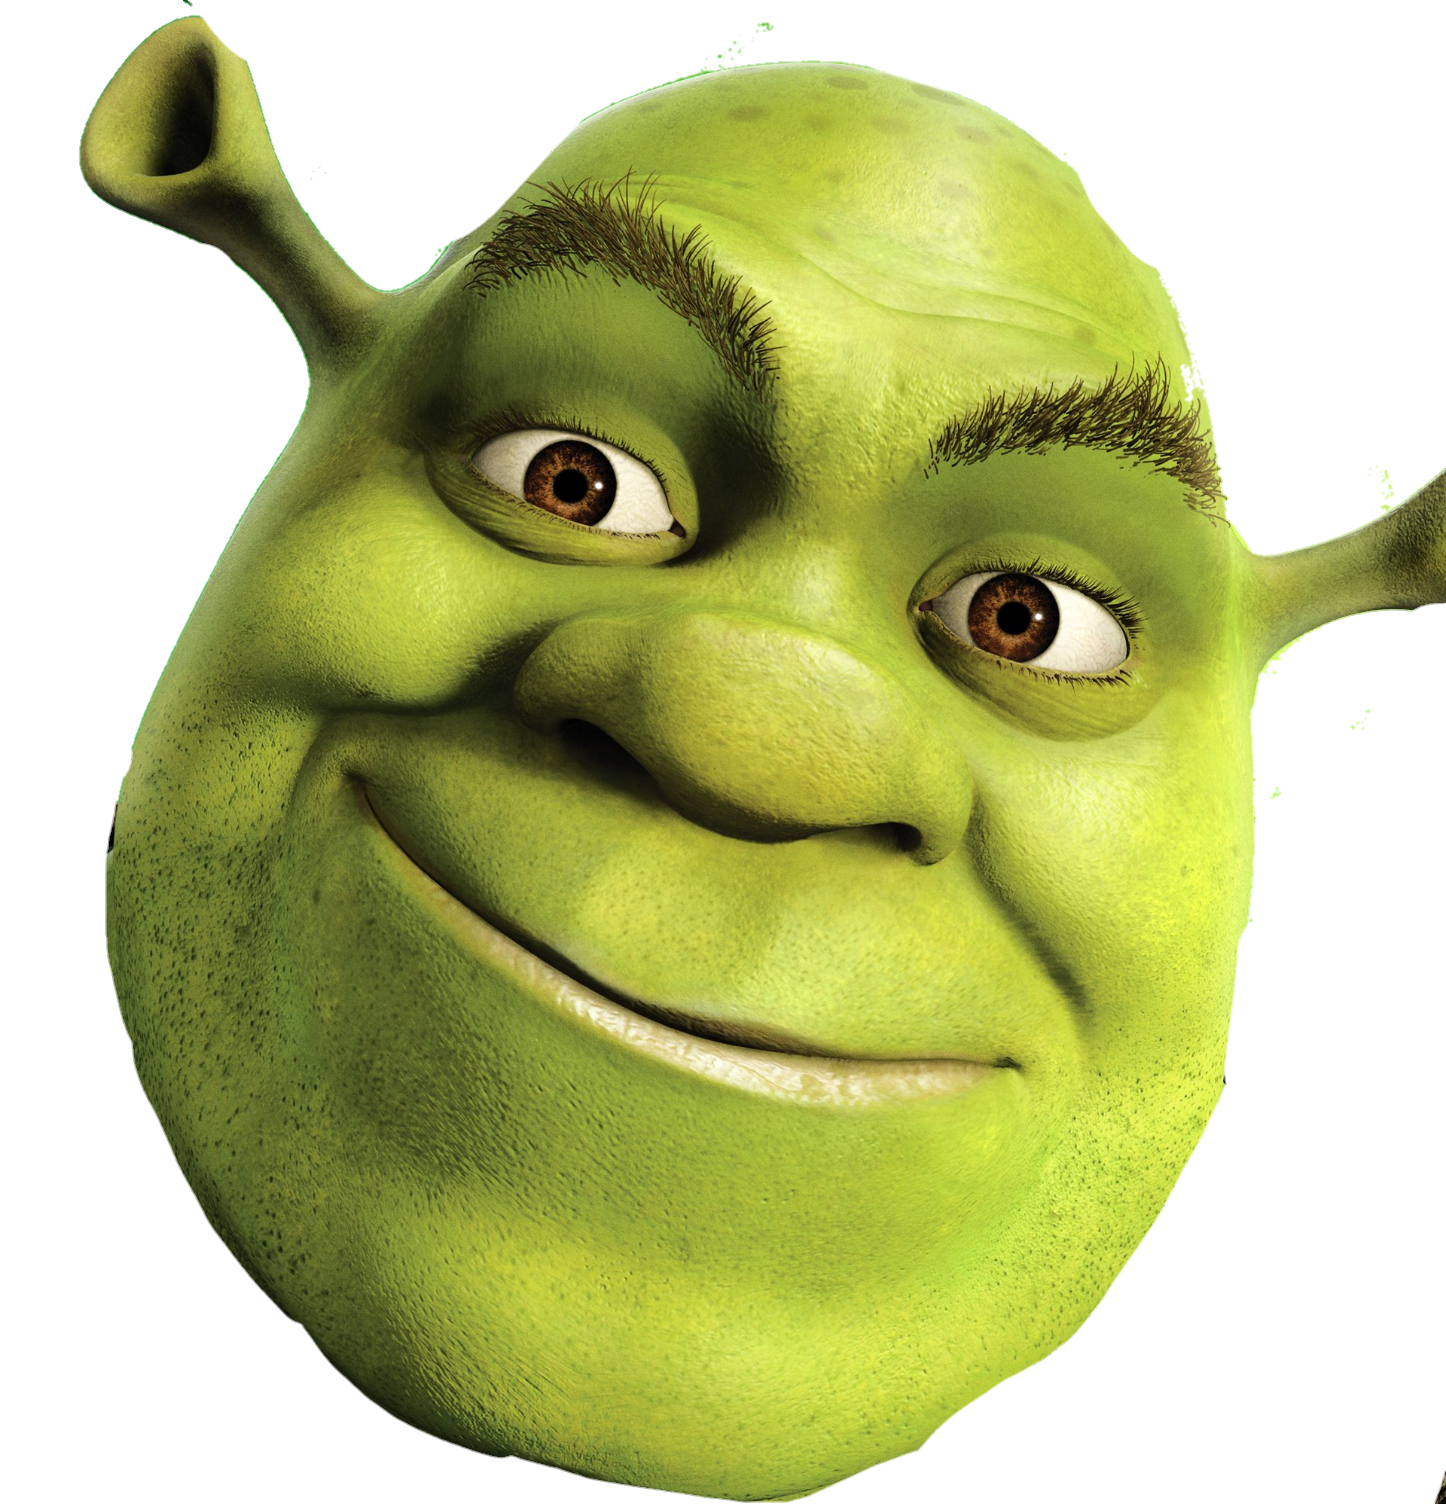 Shrek illustration, Donkey Princess Fiona Shrek The Musical, Shrek  transparent background PNG clipart